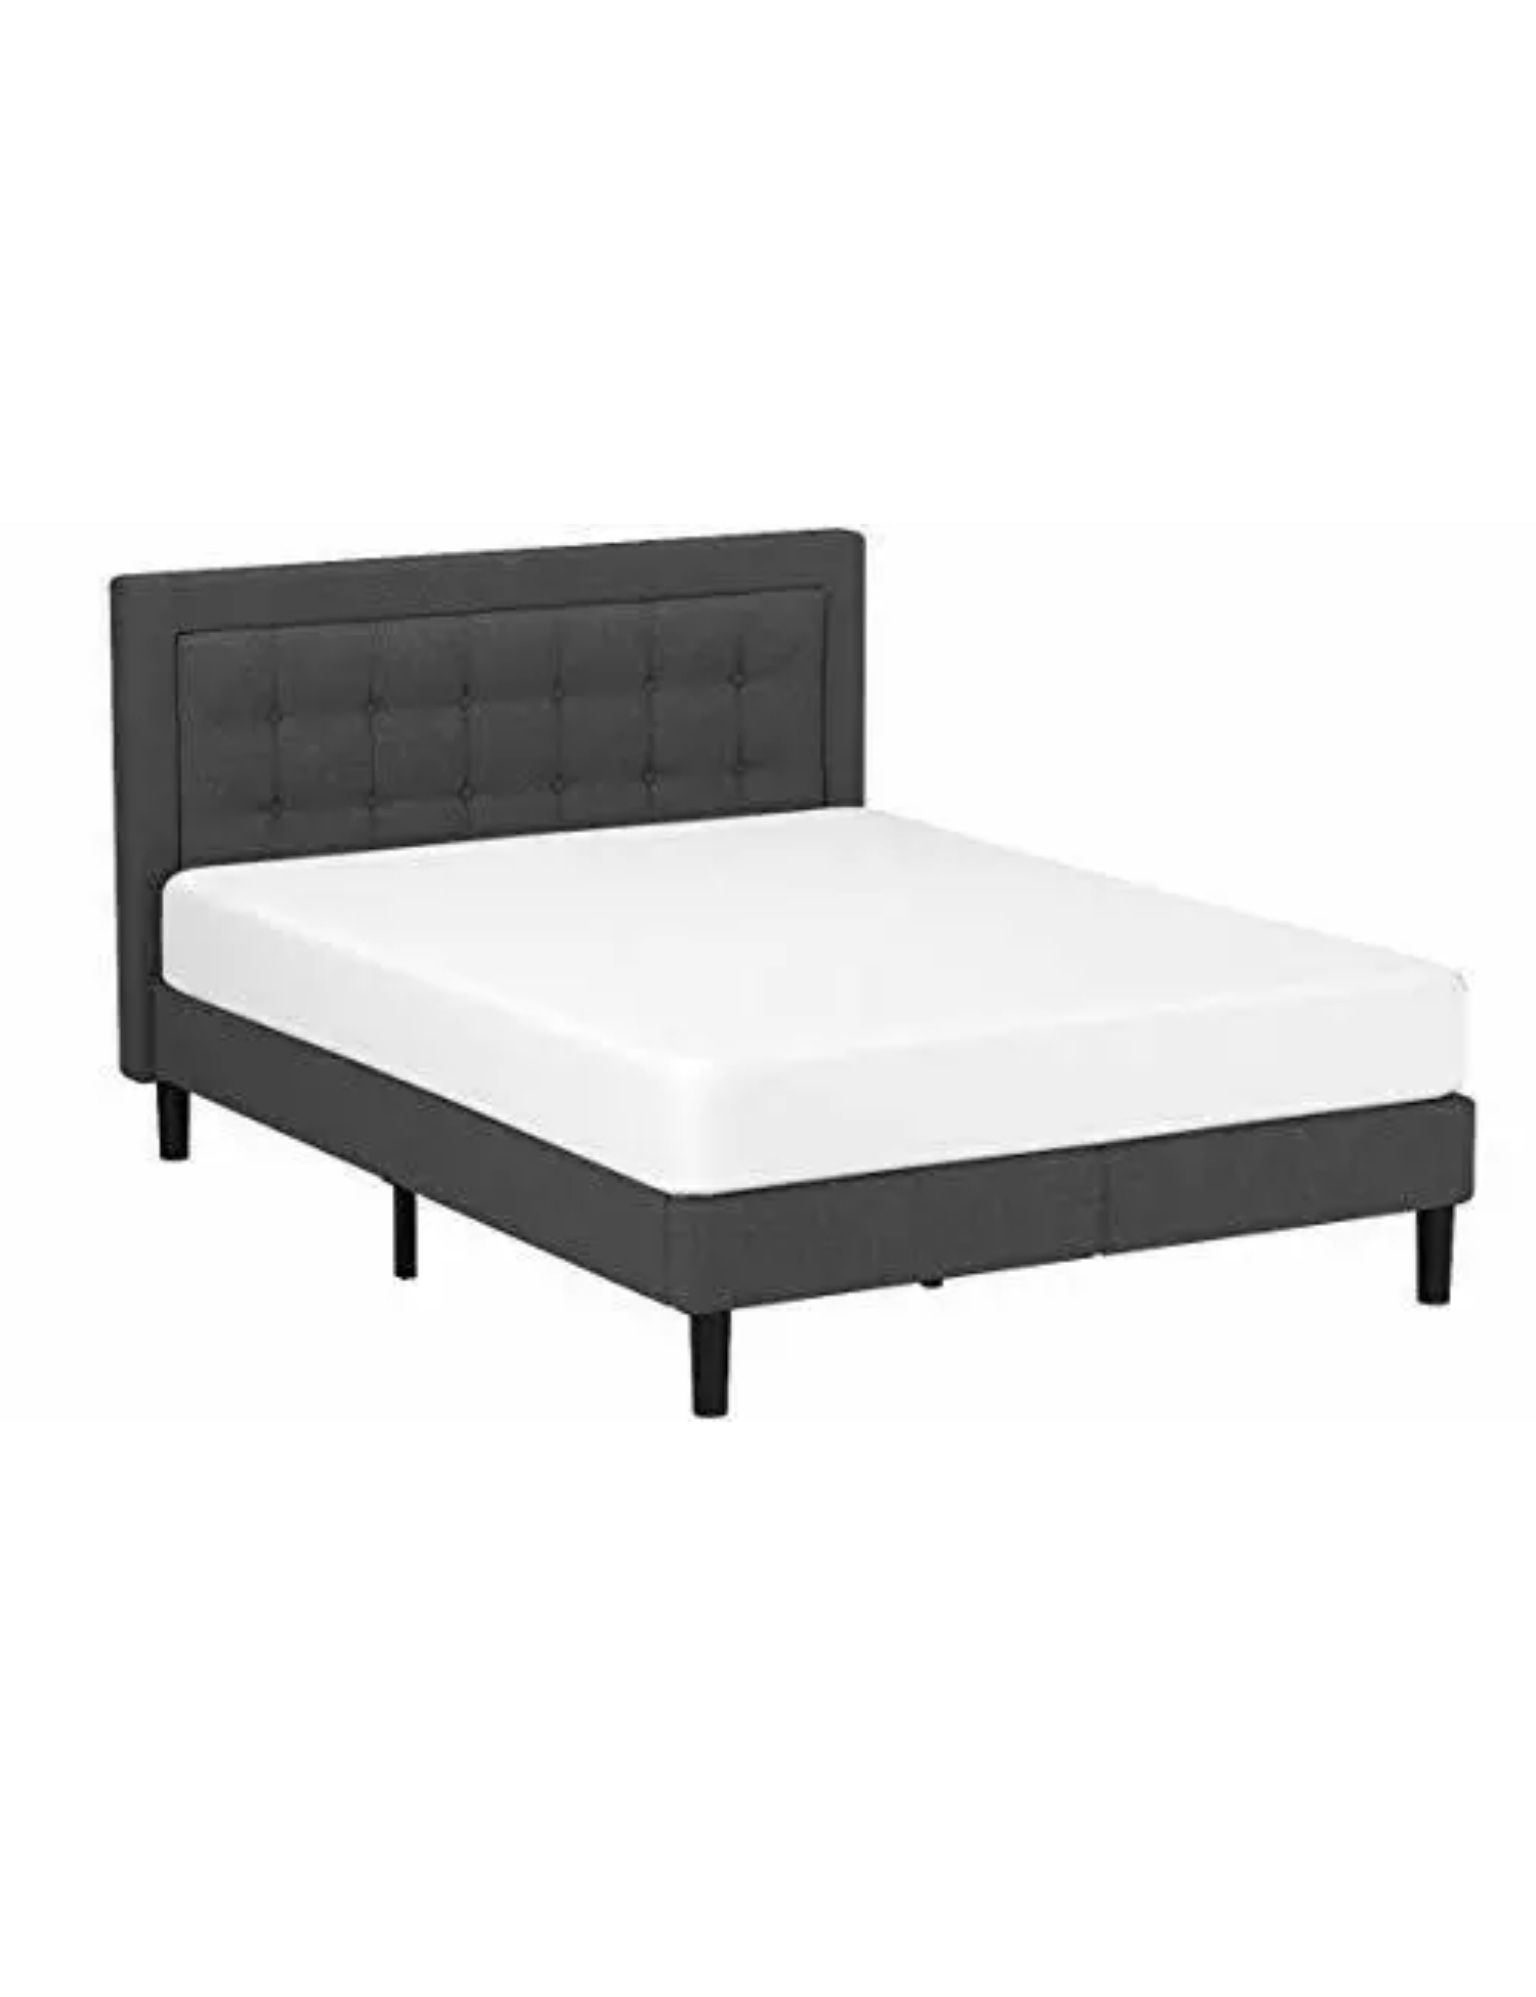 Zinus Dachelle Upholstered Platform Bed Frame / Mattress Foundation / Wood Slat Support / No Box Spring Needed / Easy Assembly, Queen, Platform Bed On